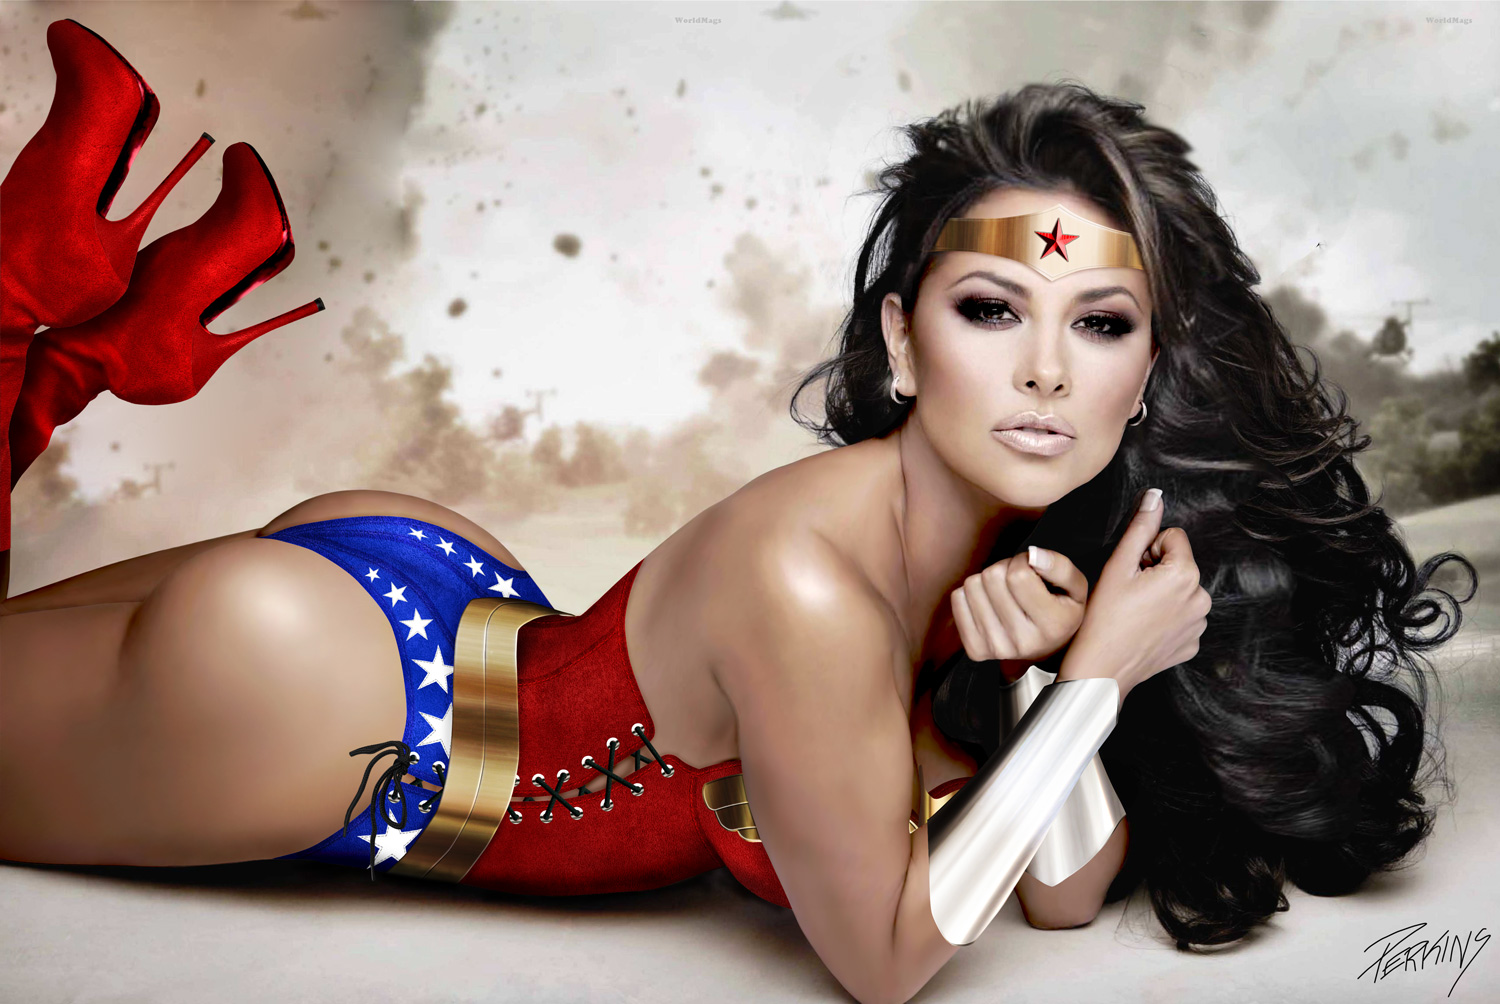 Gaby Ramirez as Wonder Woman.